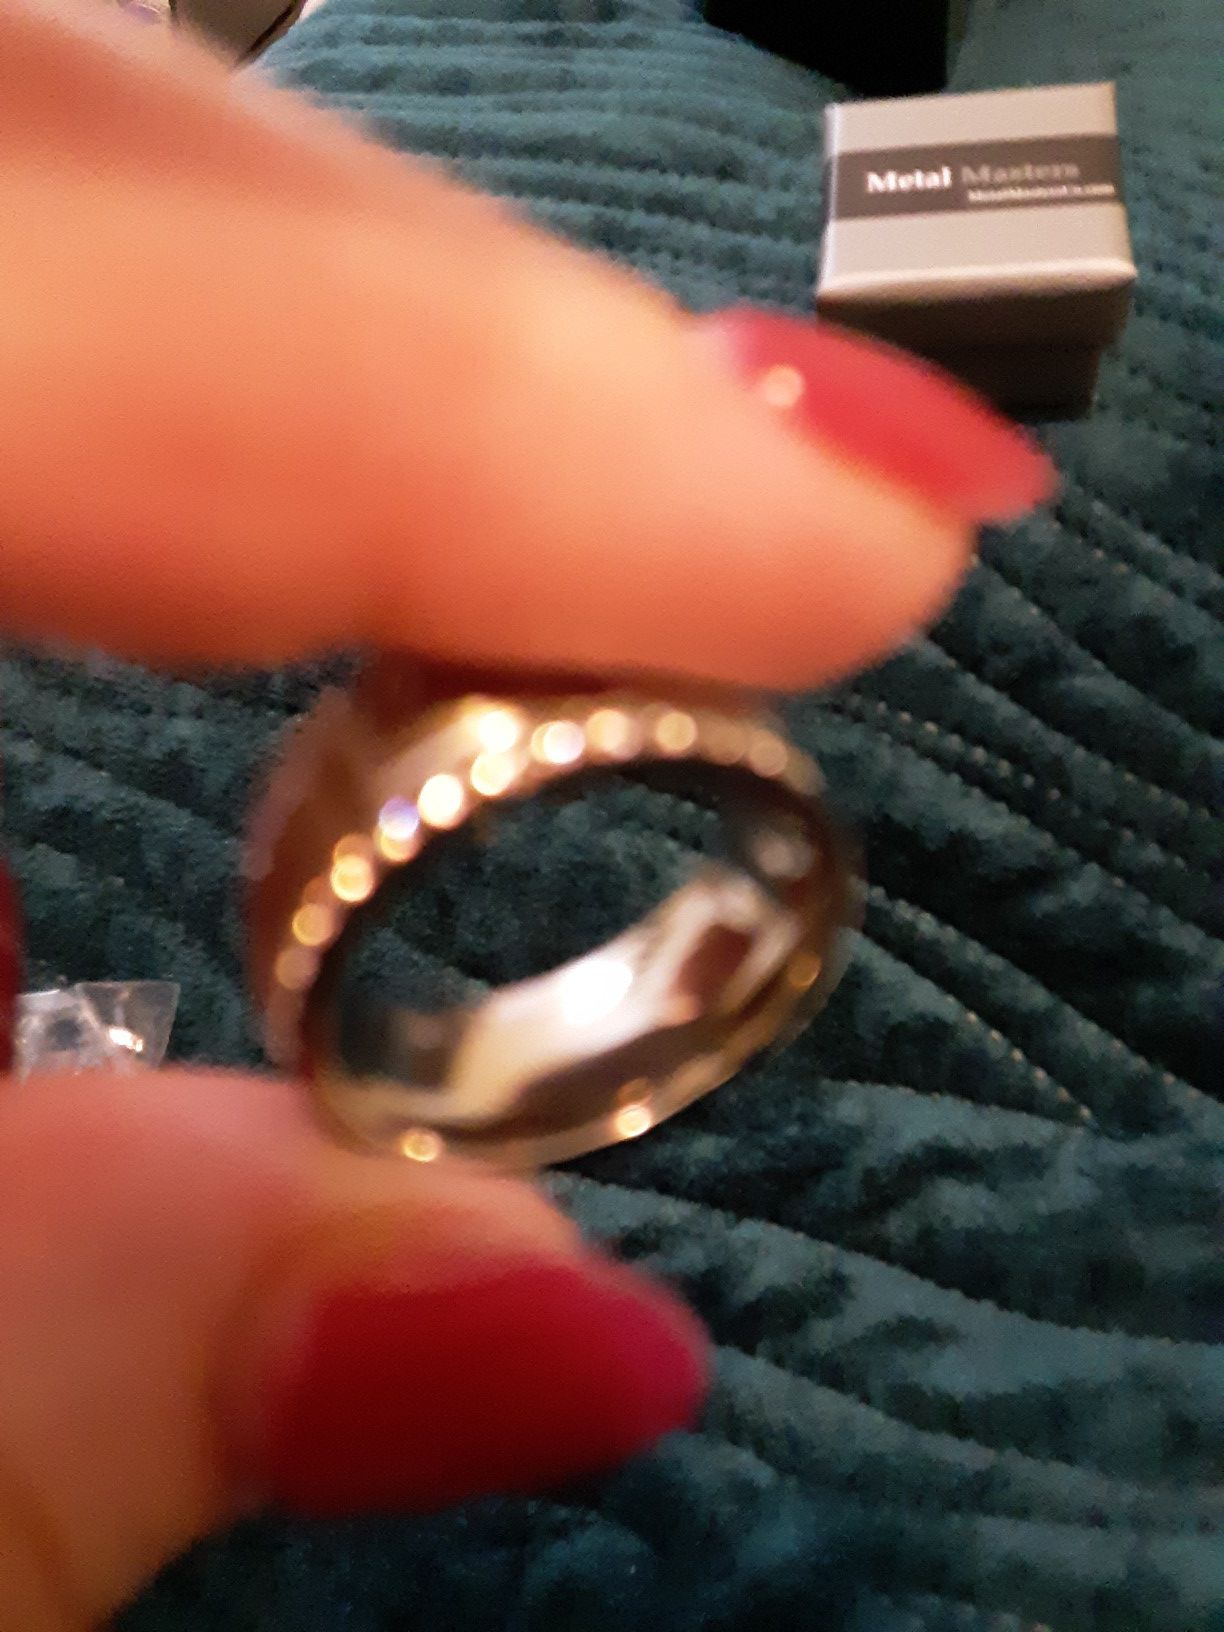 Metal Masters Titanium Size 8 Wedding Ring